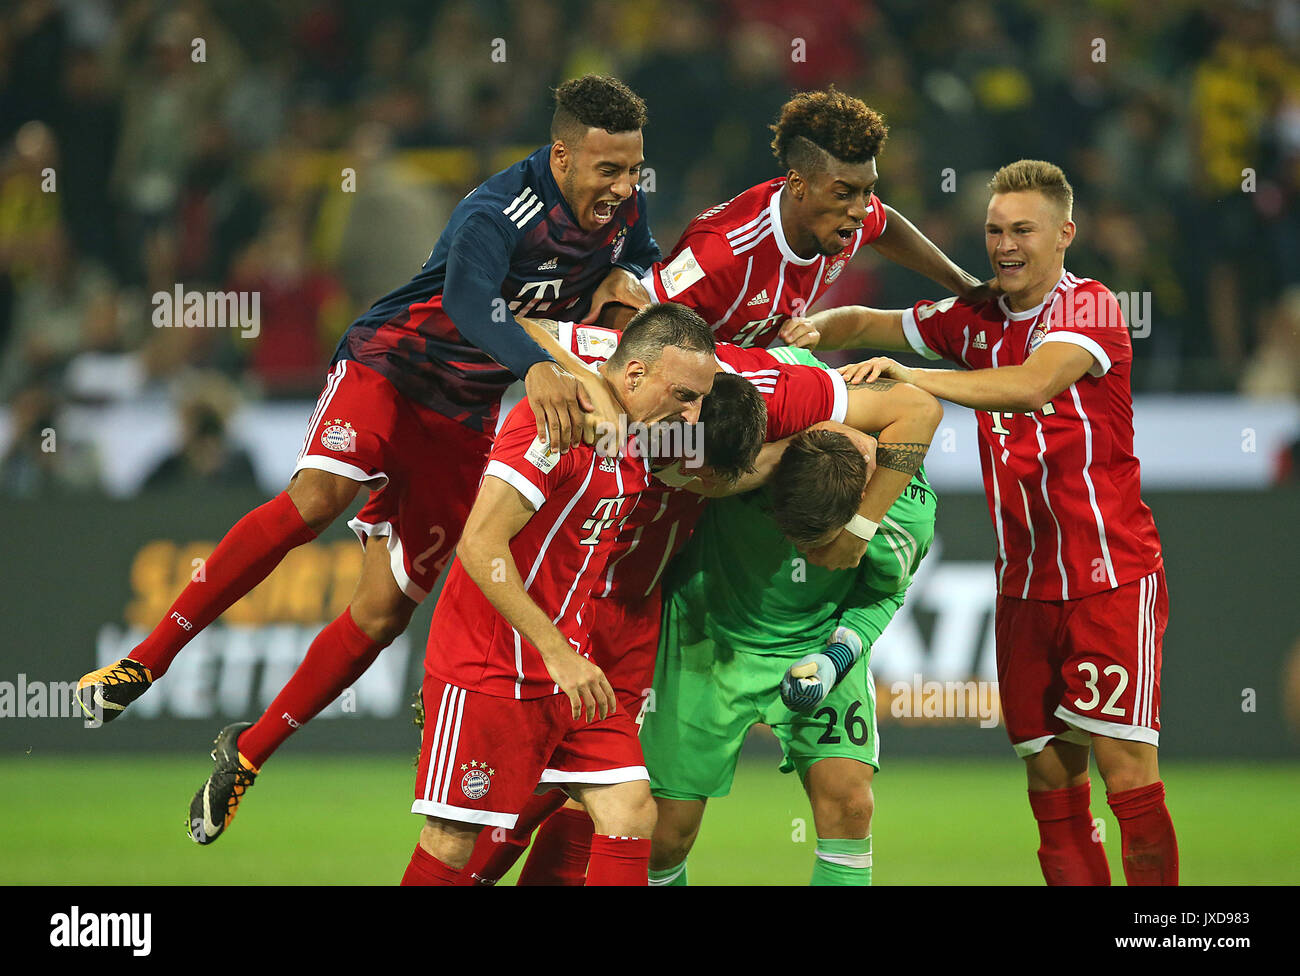 05.08.2017, DFL Supercup 2017, Borussia Dortmund - FC Bayern München, im Signal Iduna Park Dortmund. Schlussjubel Bayern München Photo: Cronos/MIS Stock Photo